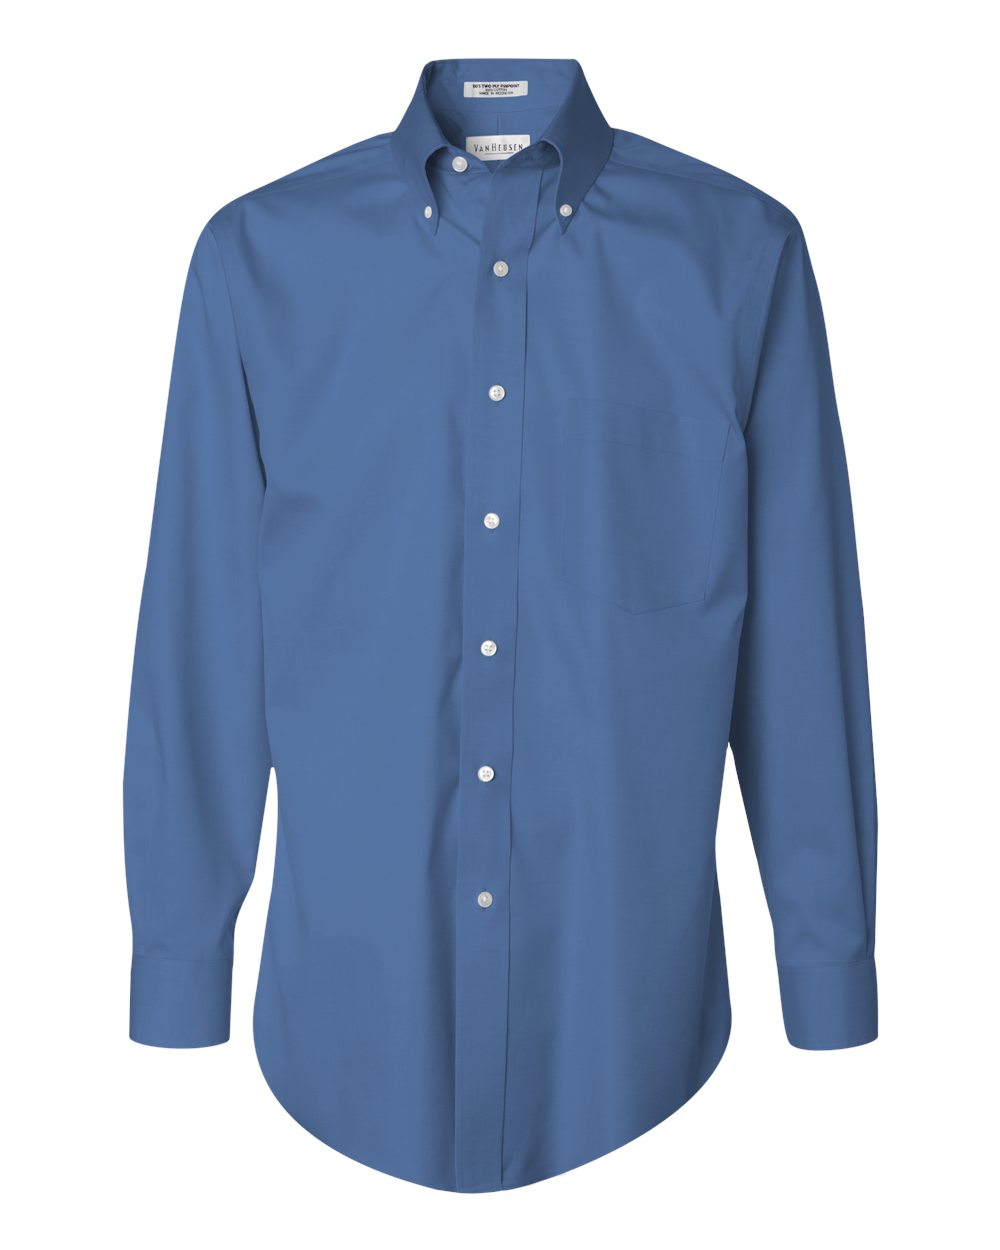 VAN HEUSEN Wrinkle-Free Oxford Button-Down Short Sleeve Shirt  M 15-15 1/2  NWT 